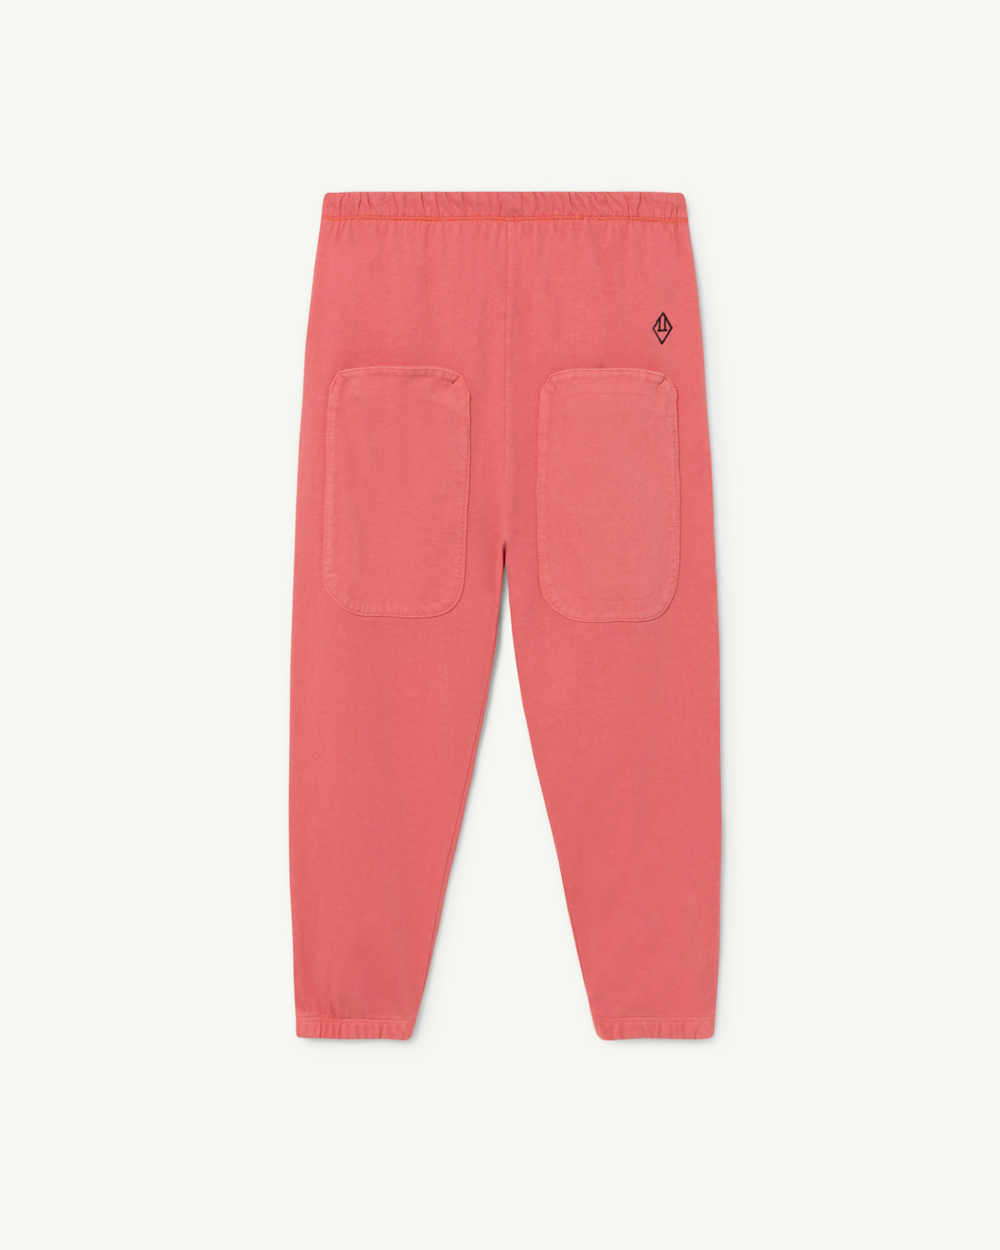 [TAO]F22019-277_CE /EAGLE KIDS PANTS Pink_Logo [6Y,10Y,12Y]